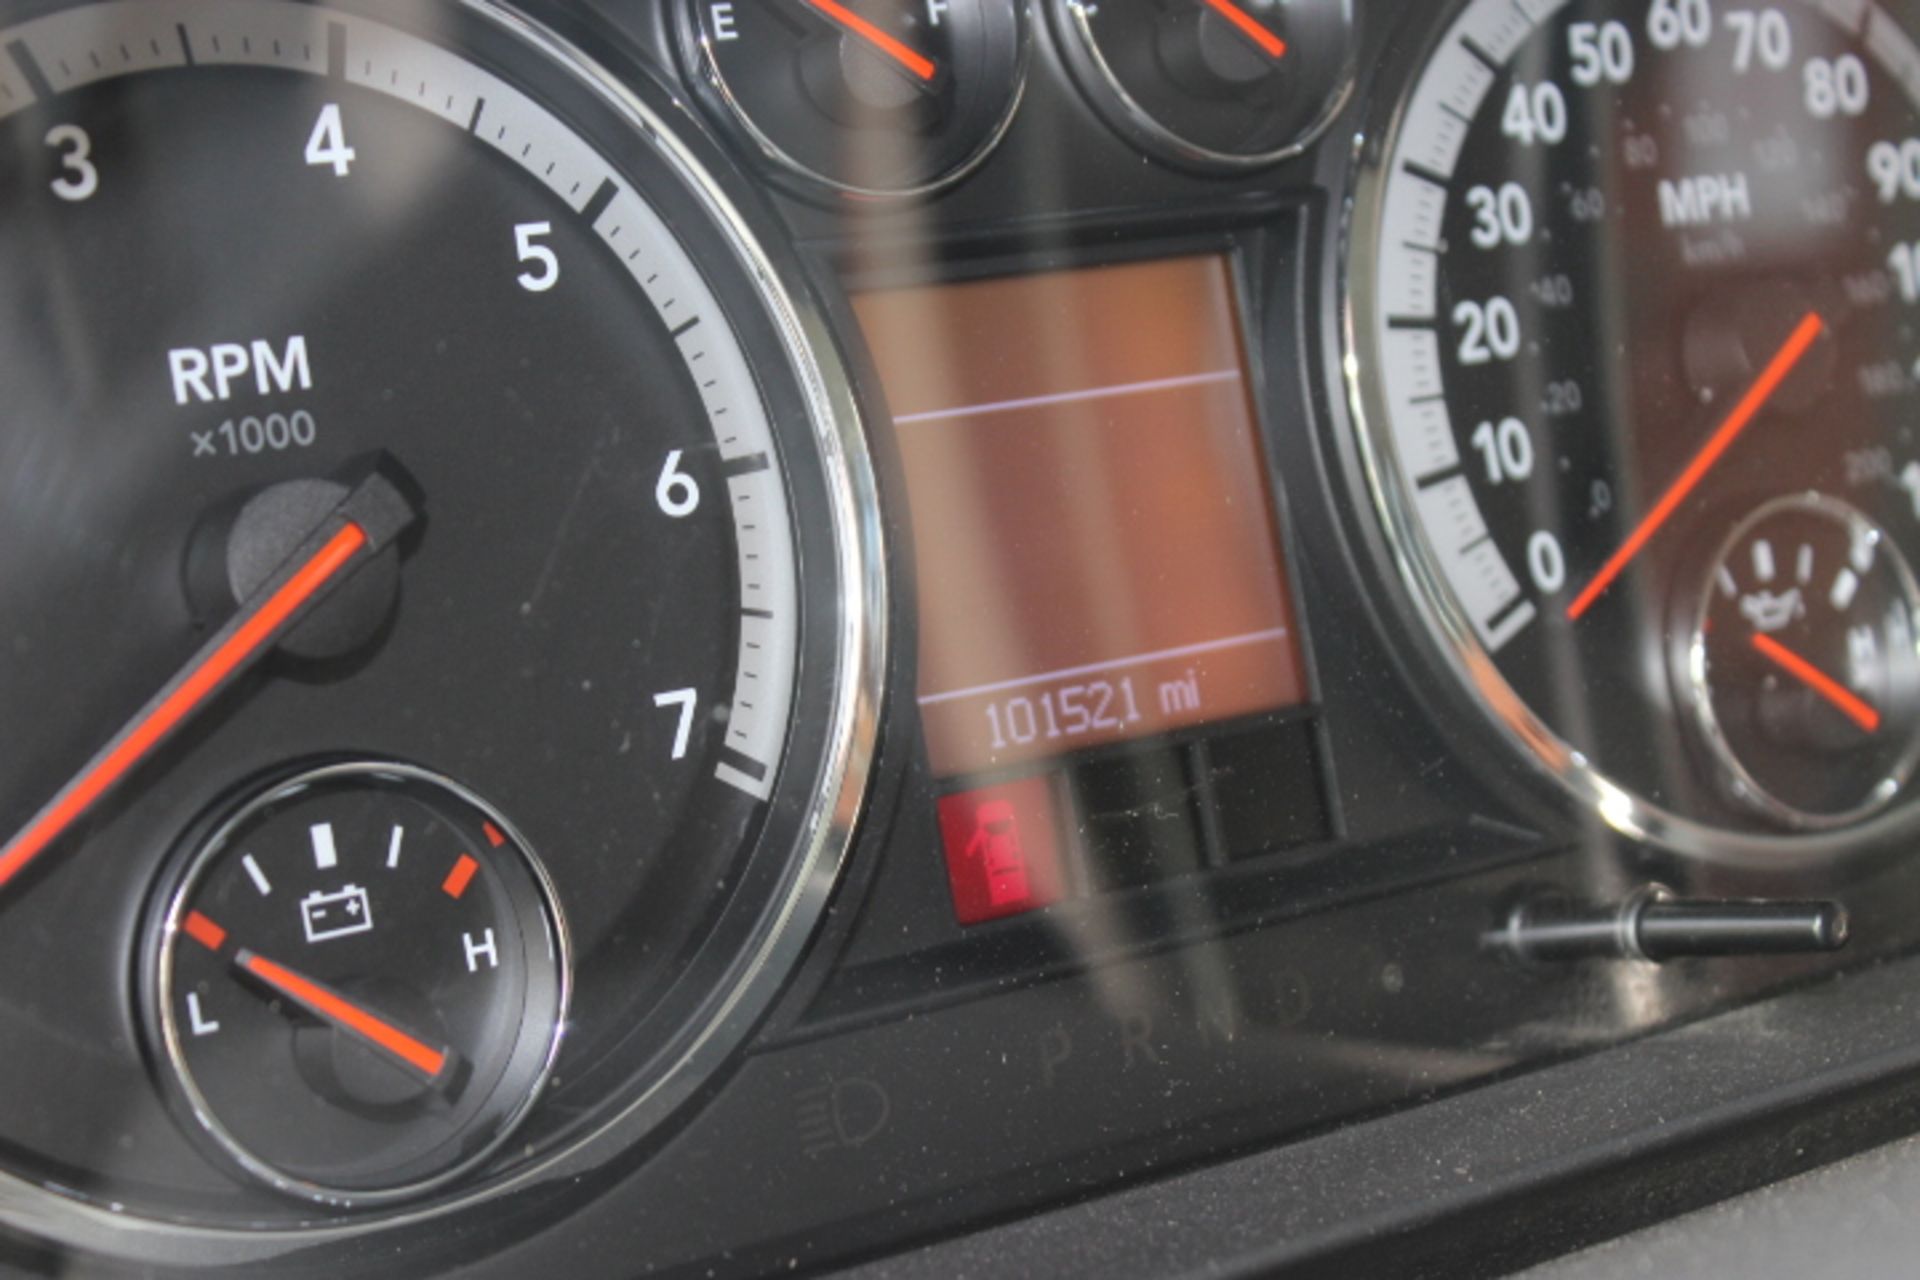 2009 DODGE  SLT QUAD CAB 4WD, 5.7L-HEMI,  VIN 1D3HV18T99S762213, 101,521 Miles - Image 5 of 5